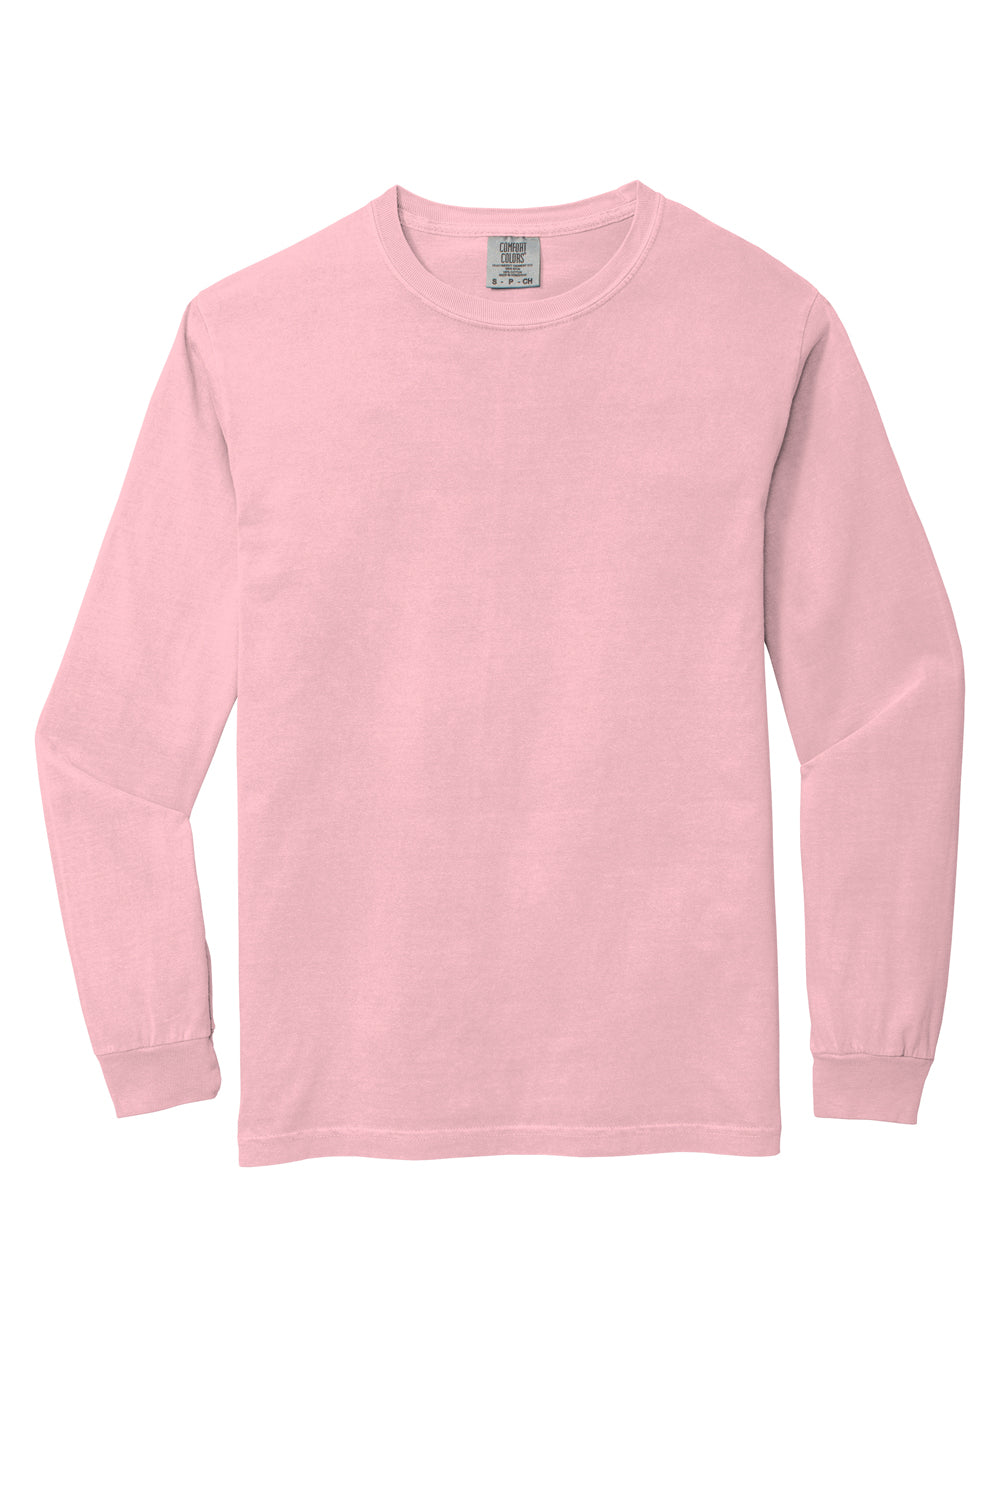 Comfort Colors 6014/C6014 Mens Long Sleeve Crewneck T-Shirt Blossom Pink Flat Front